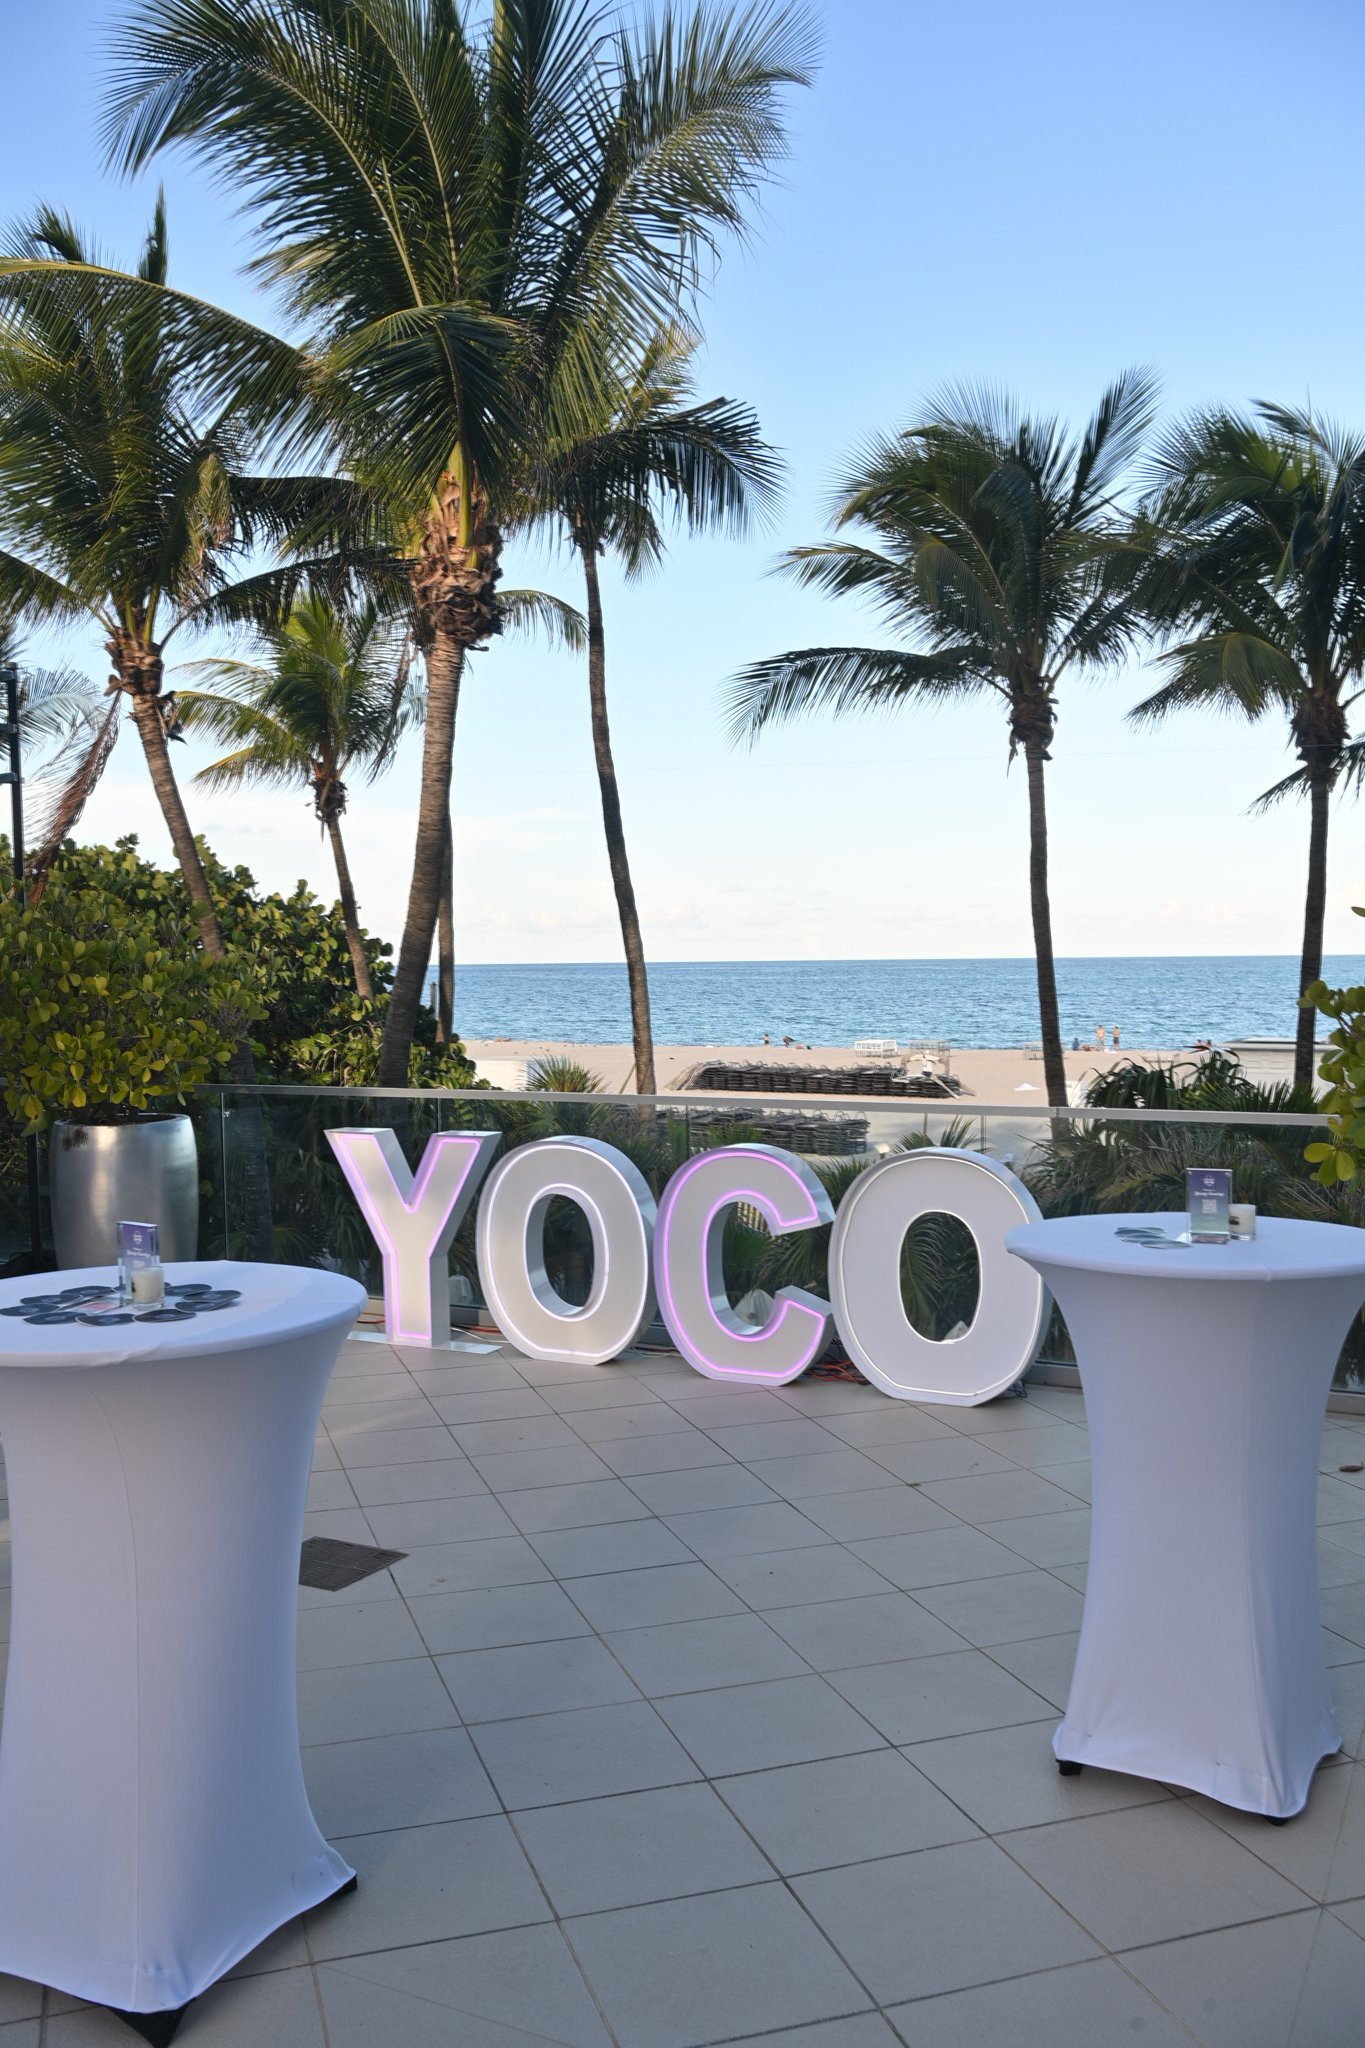 BMI X YOCO Vodka Host Pre-Show Poolside Mixer For 2022 BMI R&B: Hip-Hop Awards At the Fontainebleau Miami Beach 3.jpg